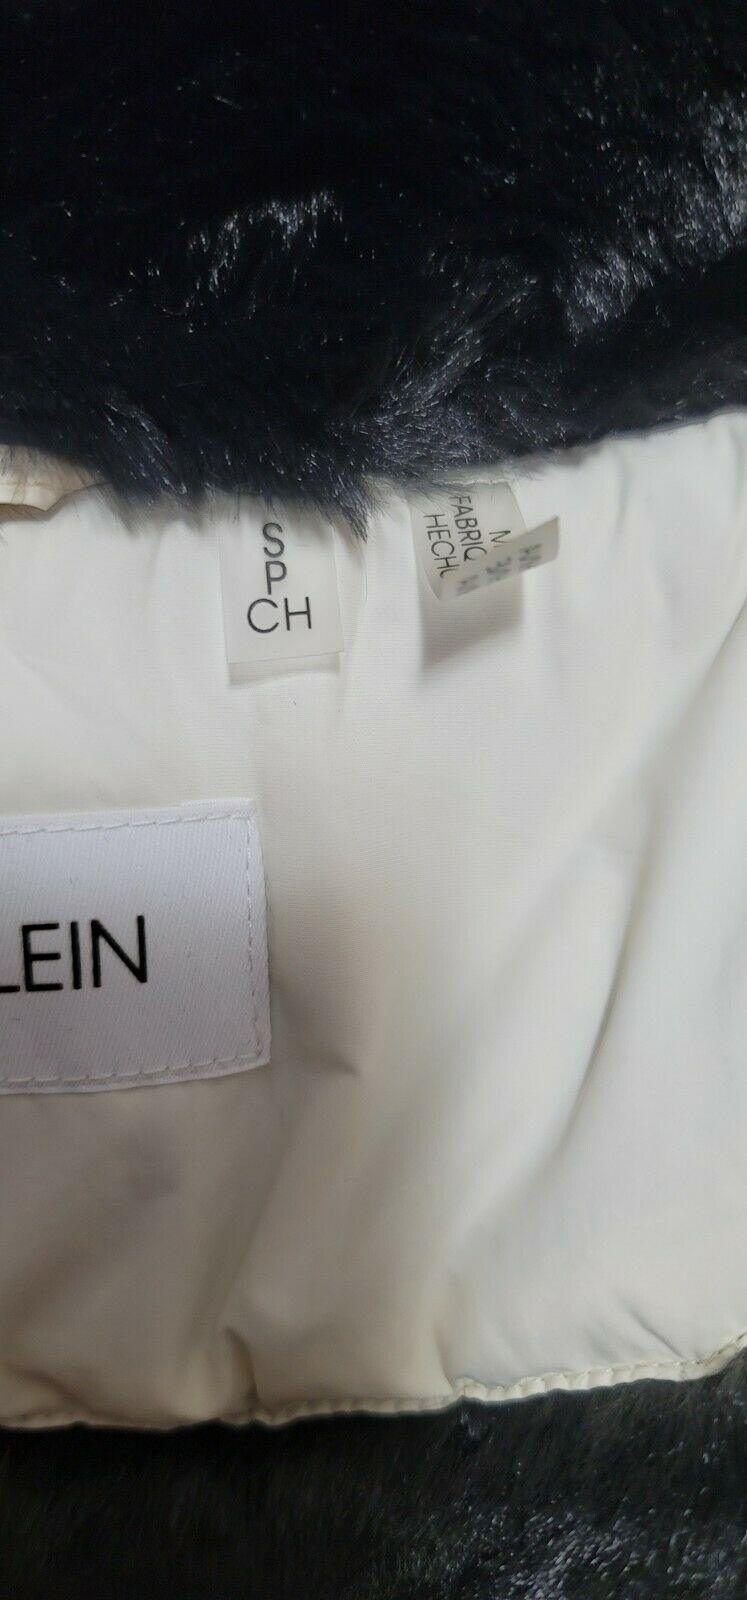 CALVIN KLEIN Women's White Puffer Hooded Winter Coat Size S - SVNYFancy